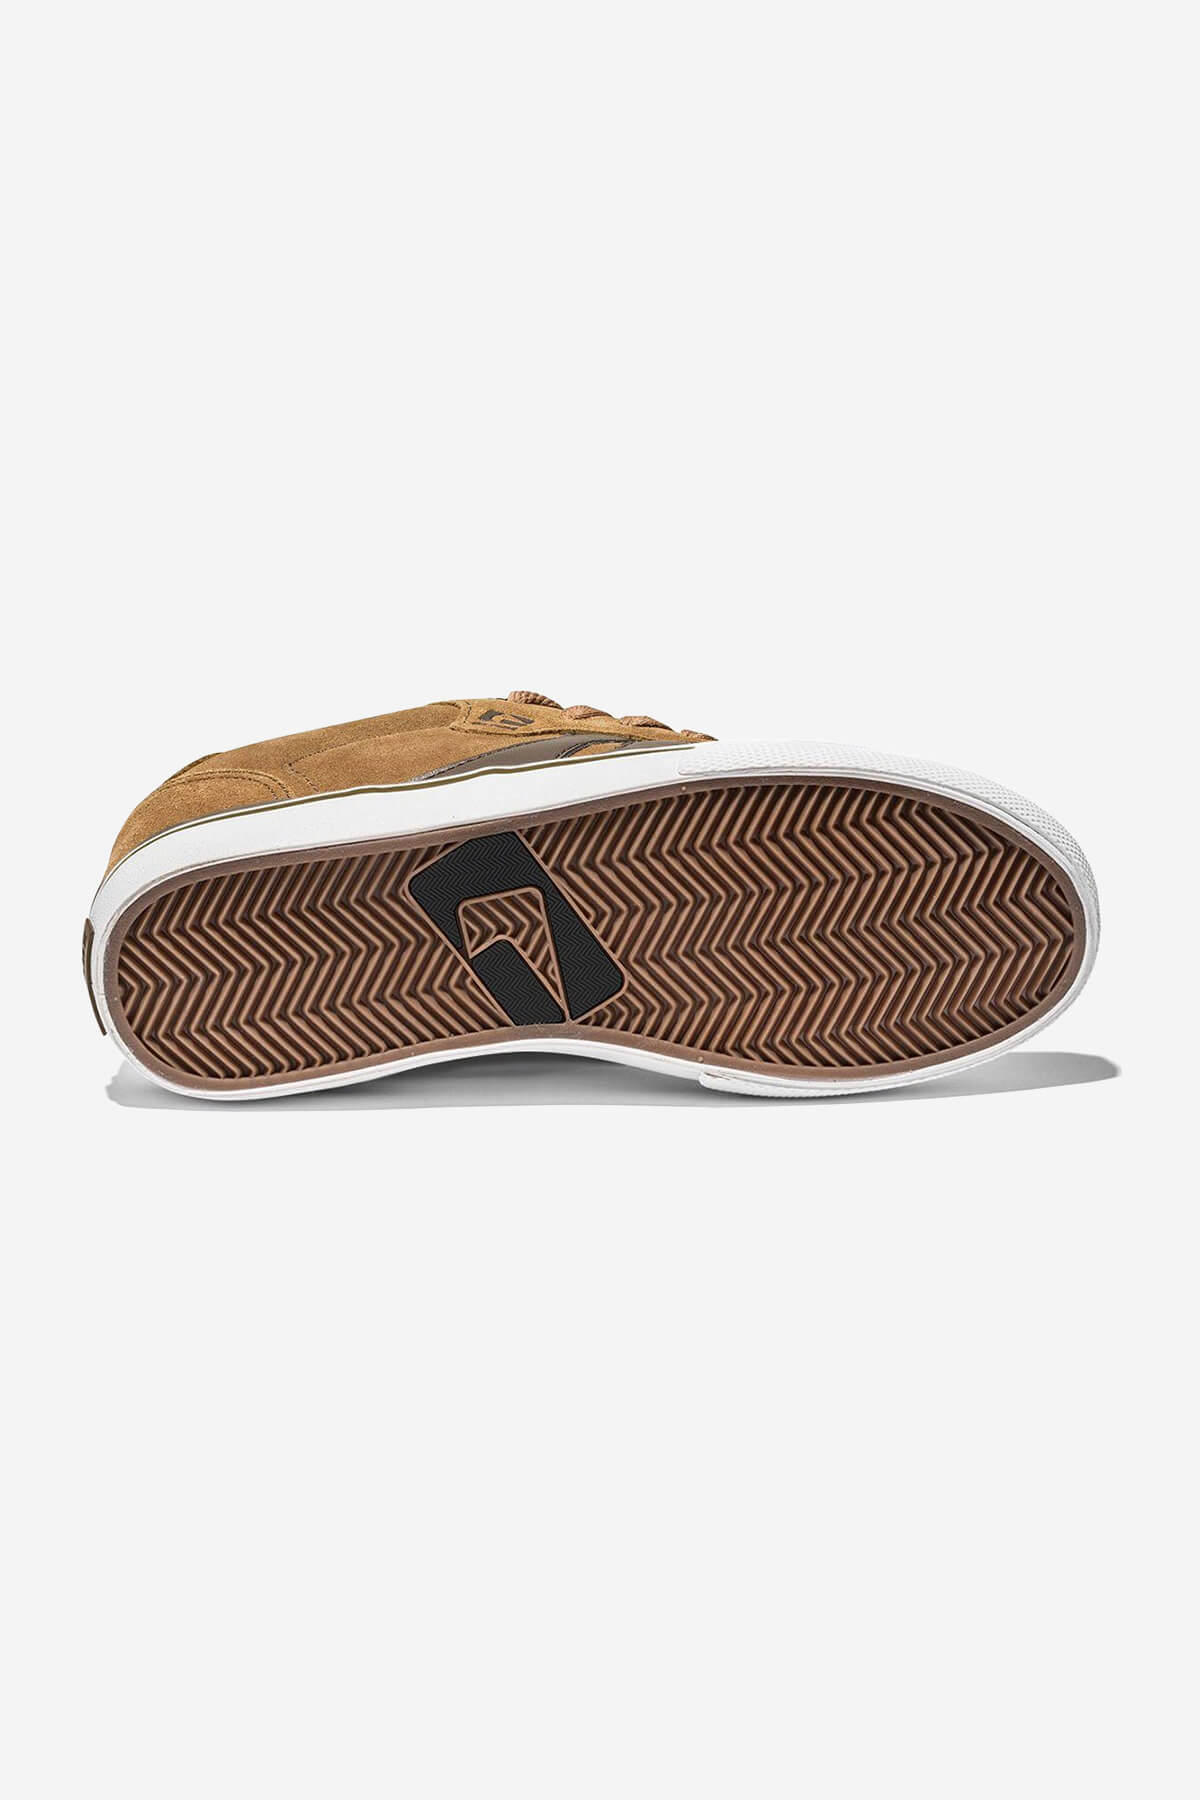 Globe - Encore 2 - Tan/Brown - skateboard Sapatos